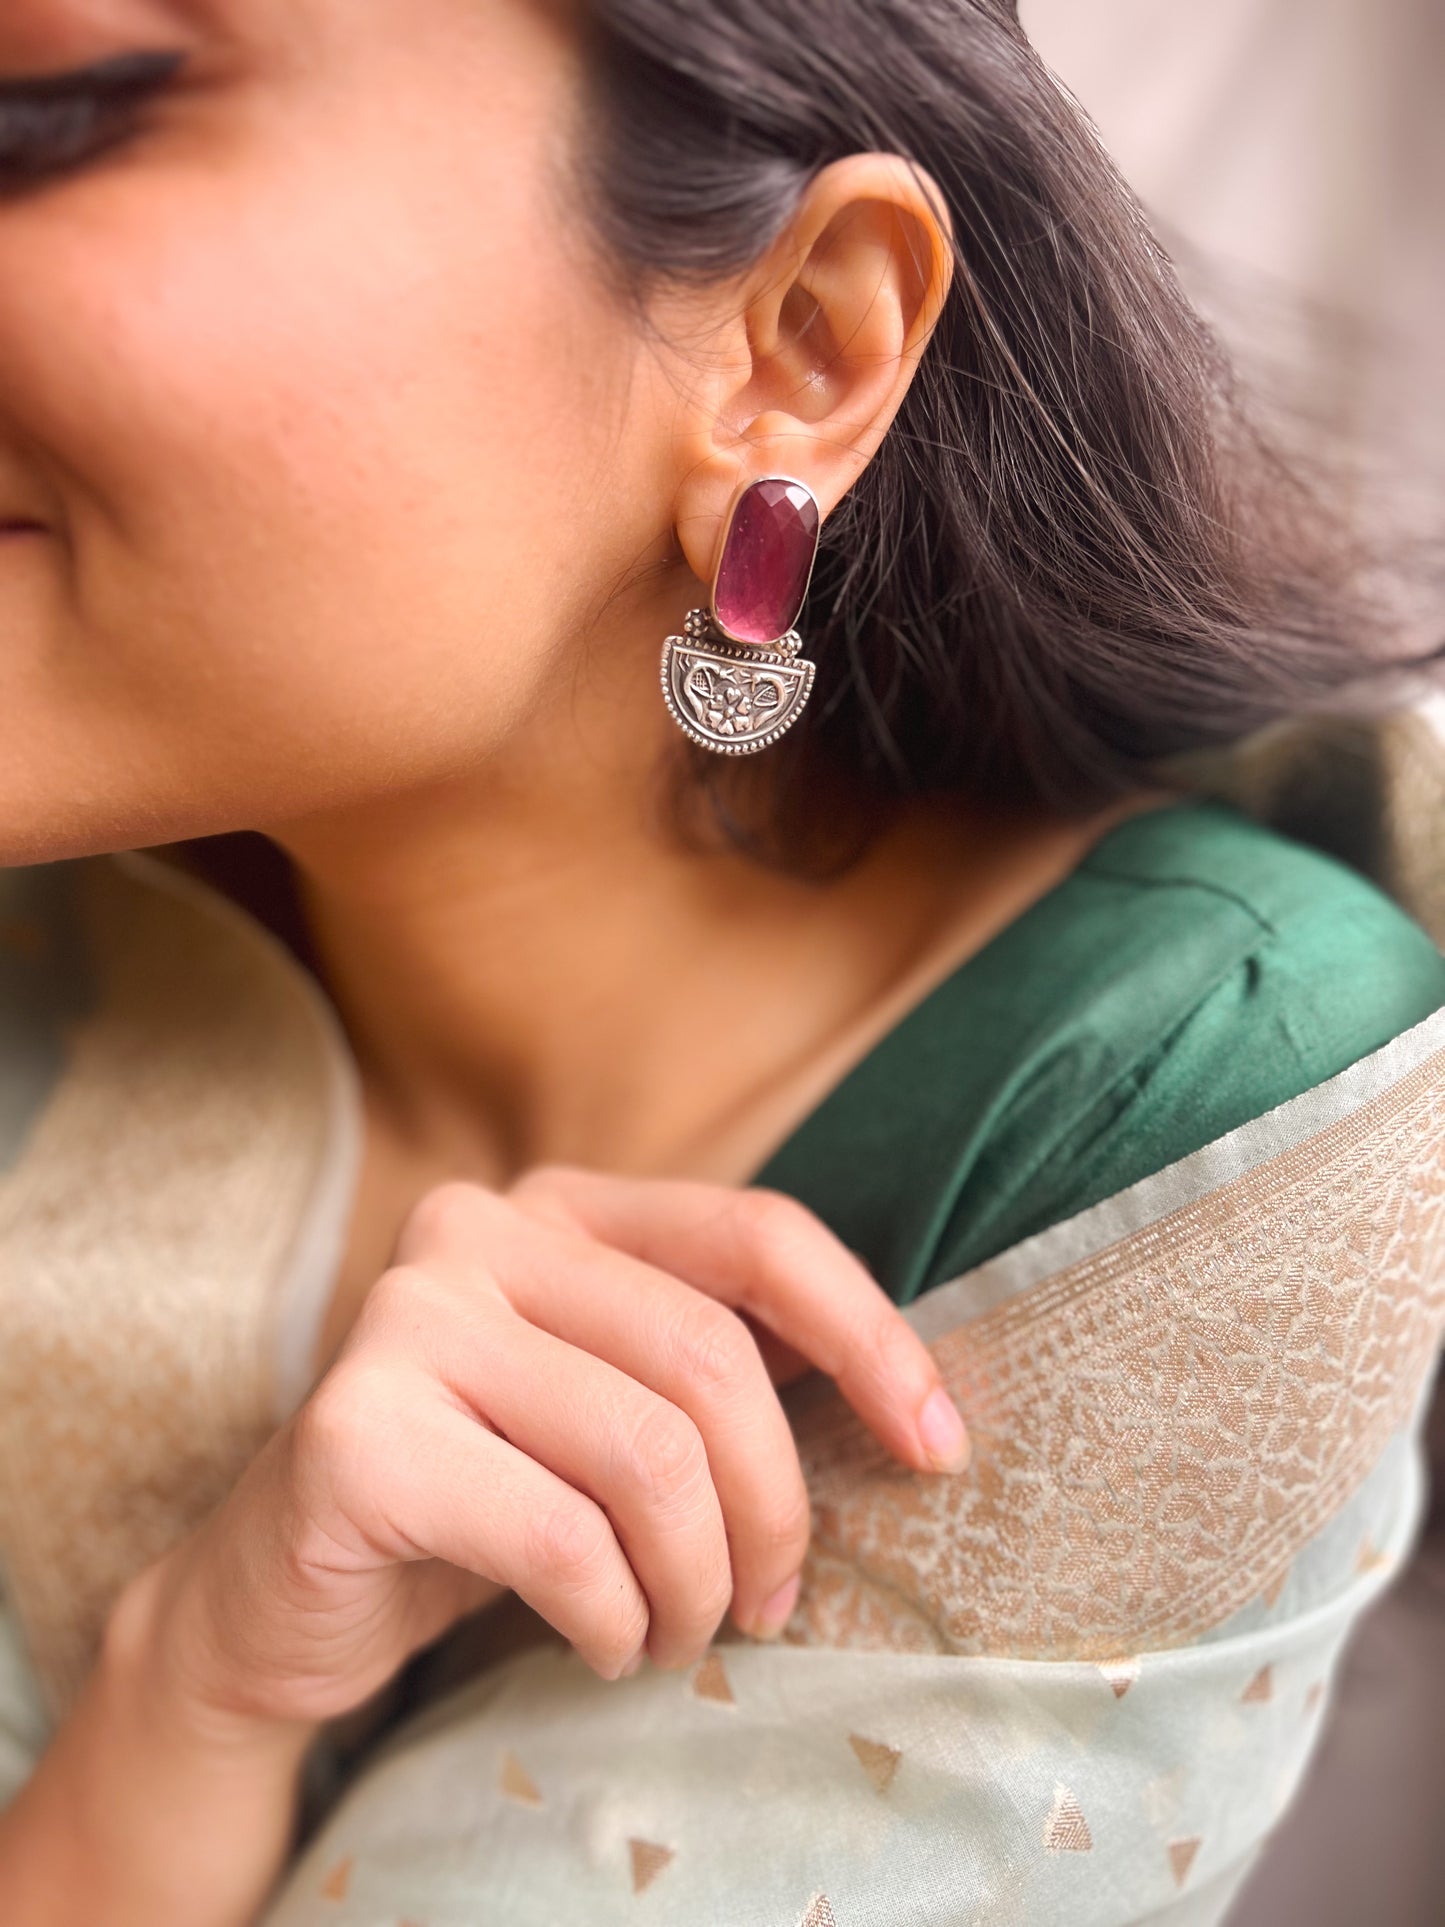 Vasudha oxidised silver earring with pink onyx